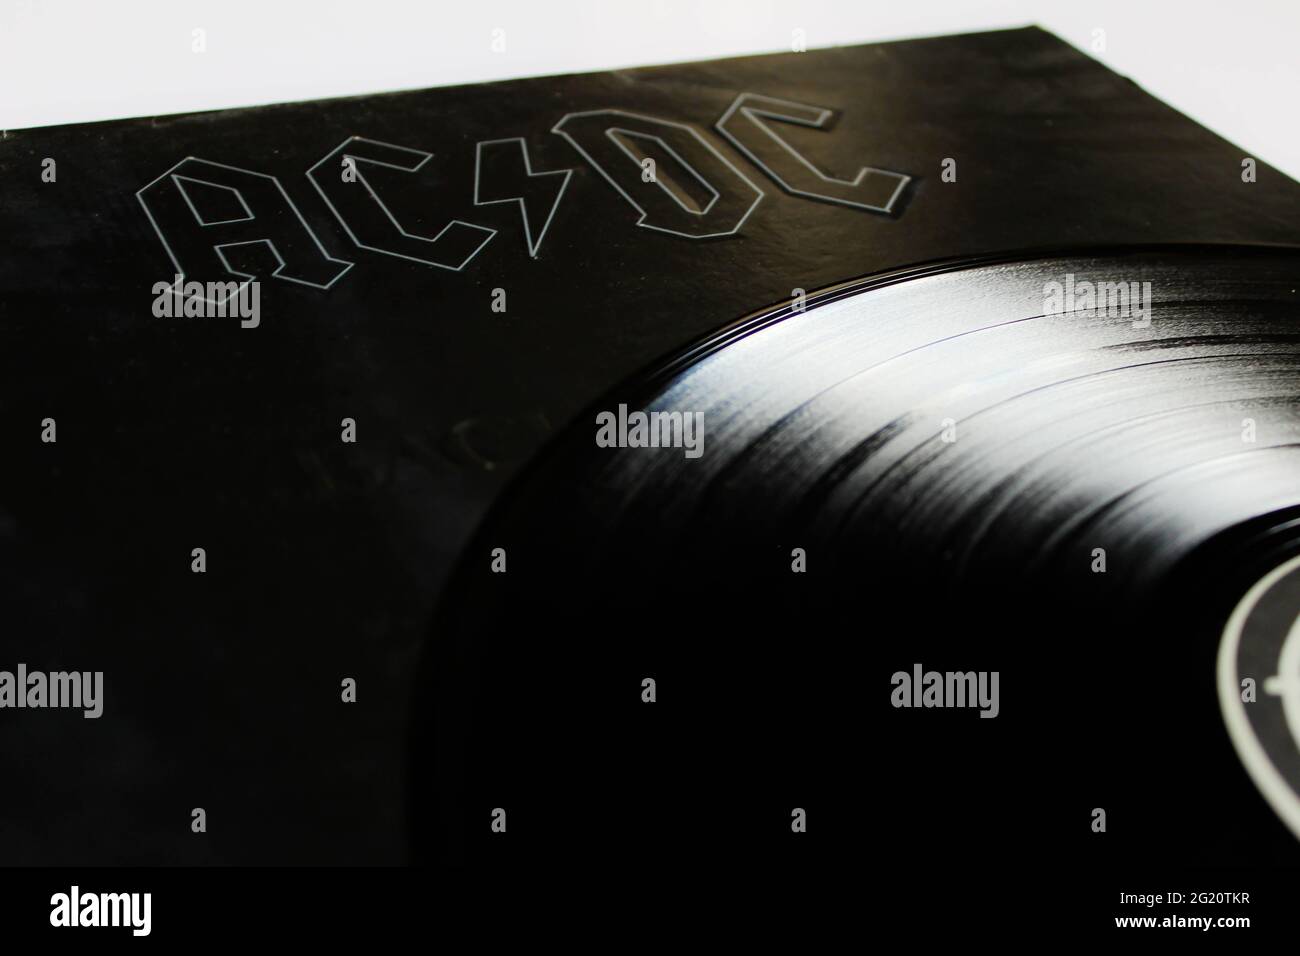 Australian Classic rock band, ACDC music album on vinyl record LP disc. Titled Back in Black album cover Stock Photo